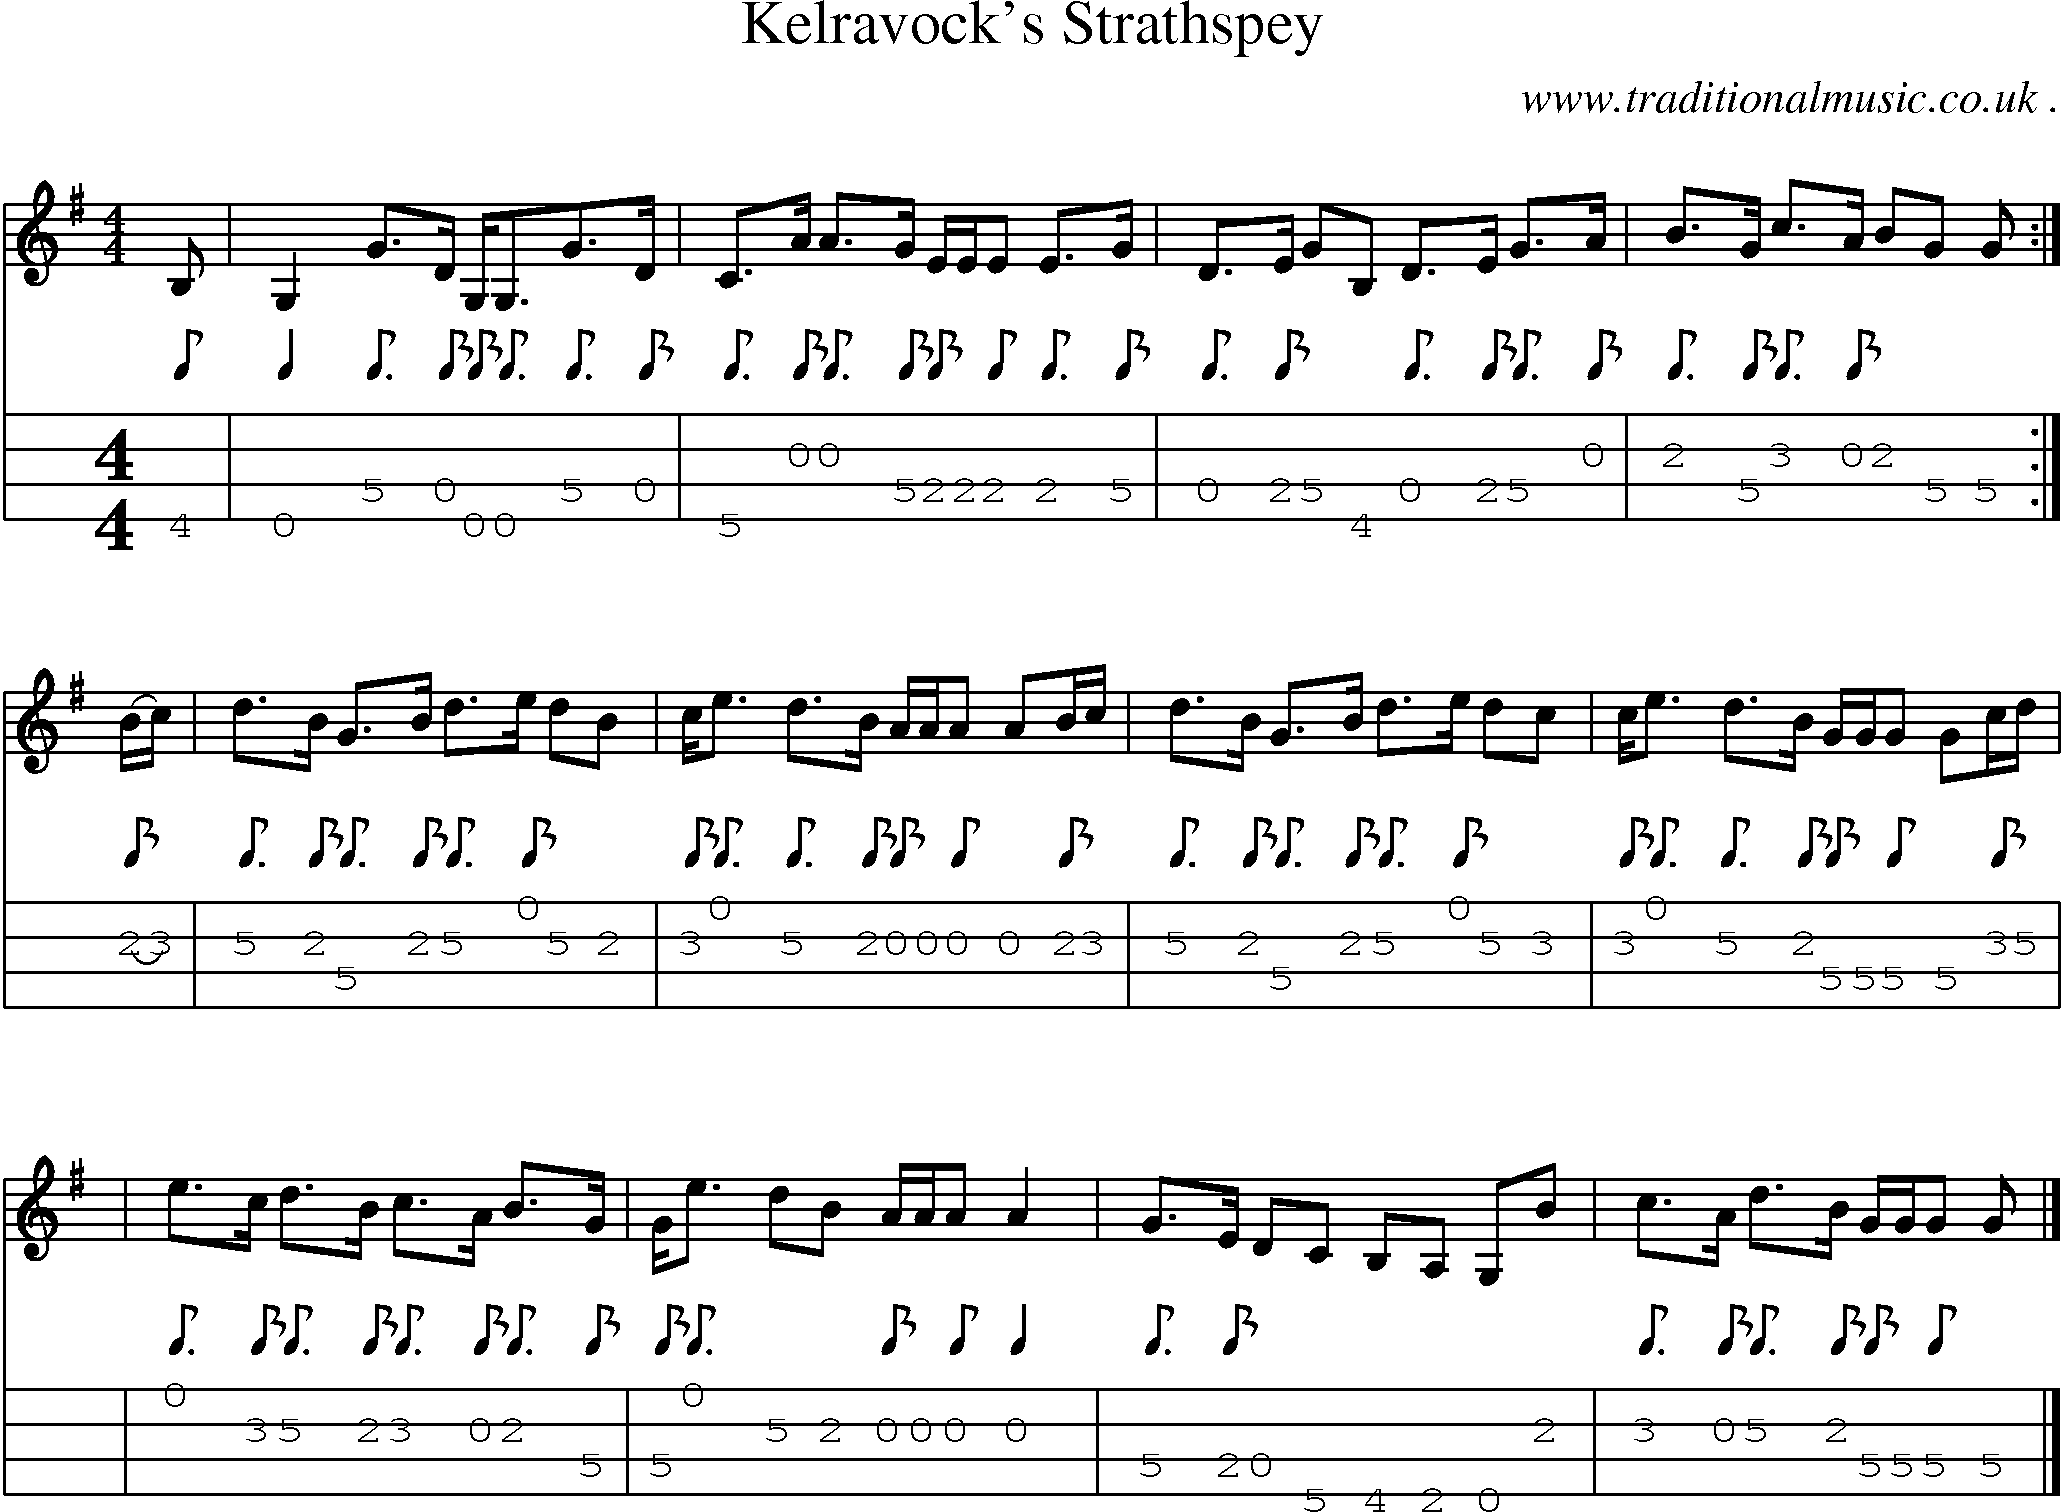 Sheet-music  score, Chords and Mandolin Tabs for Kelravocks Strathspey